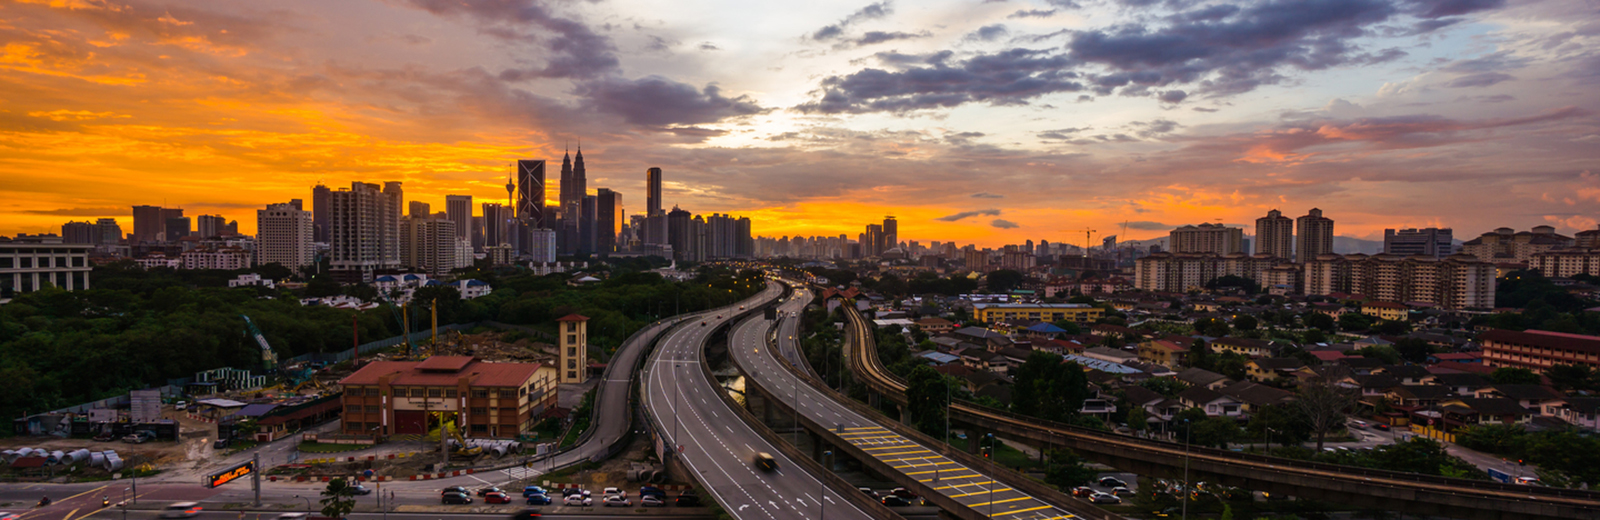 Sunset skyline over developing city